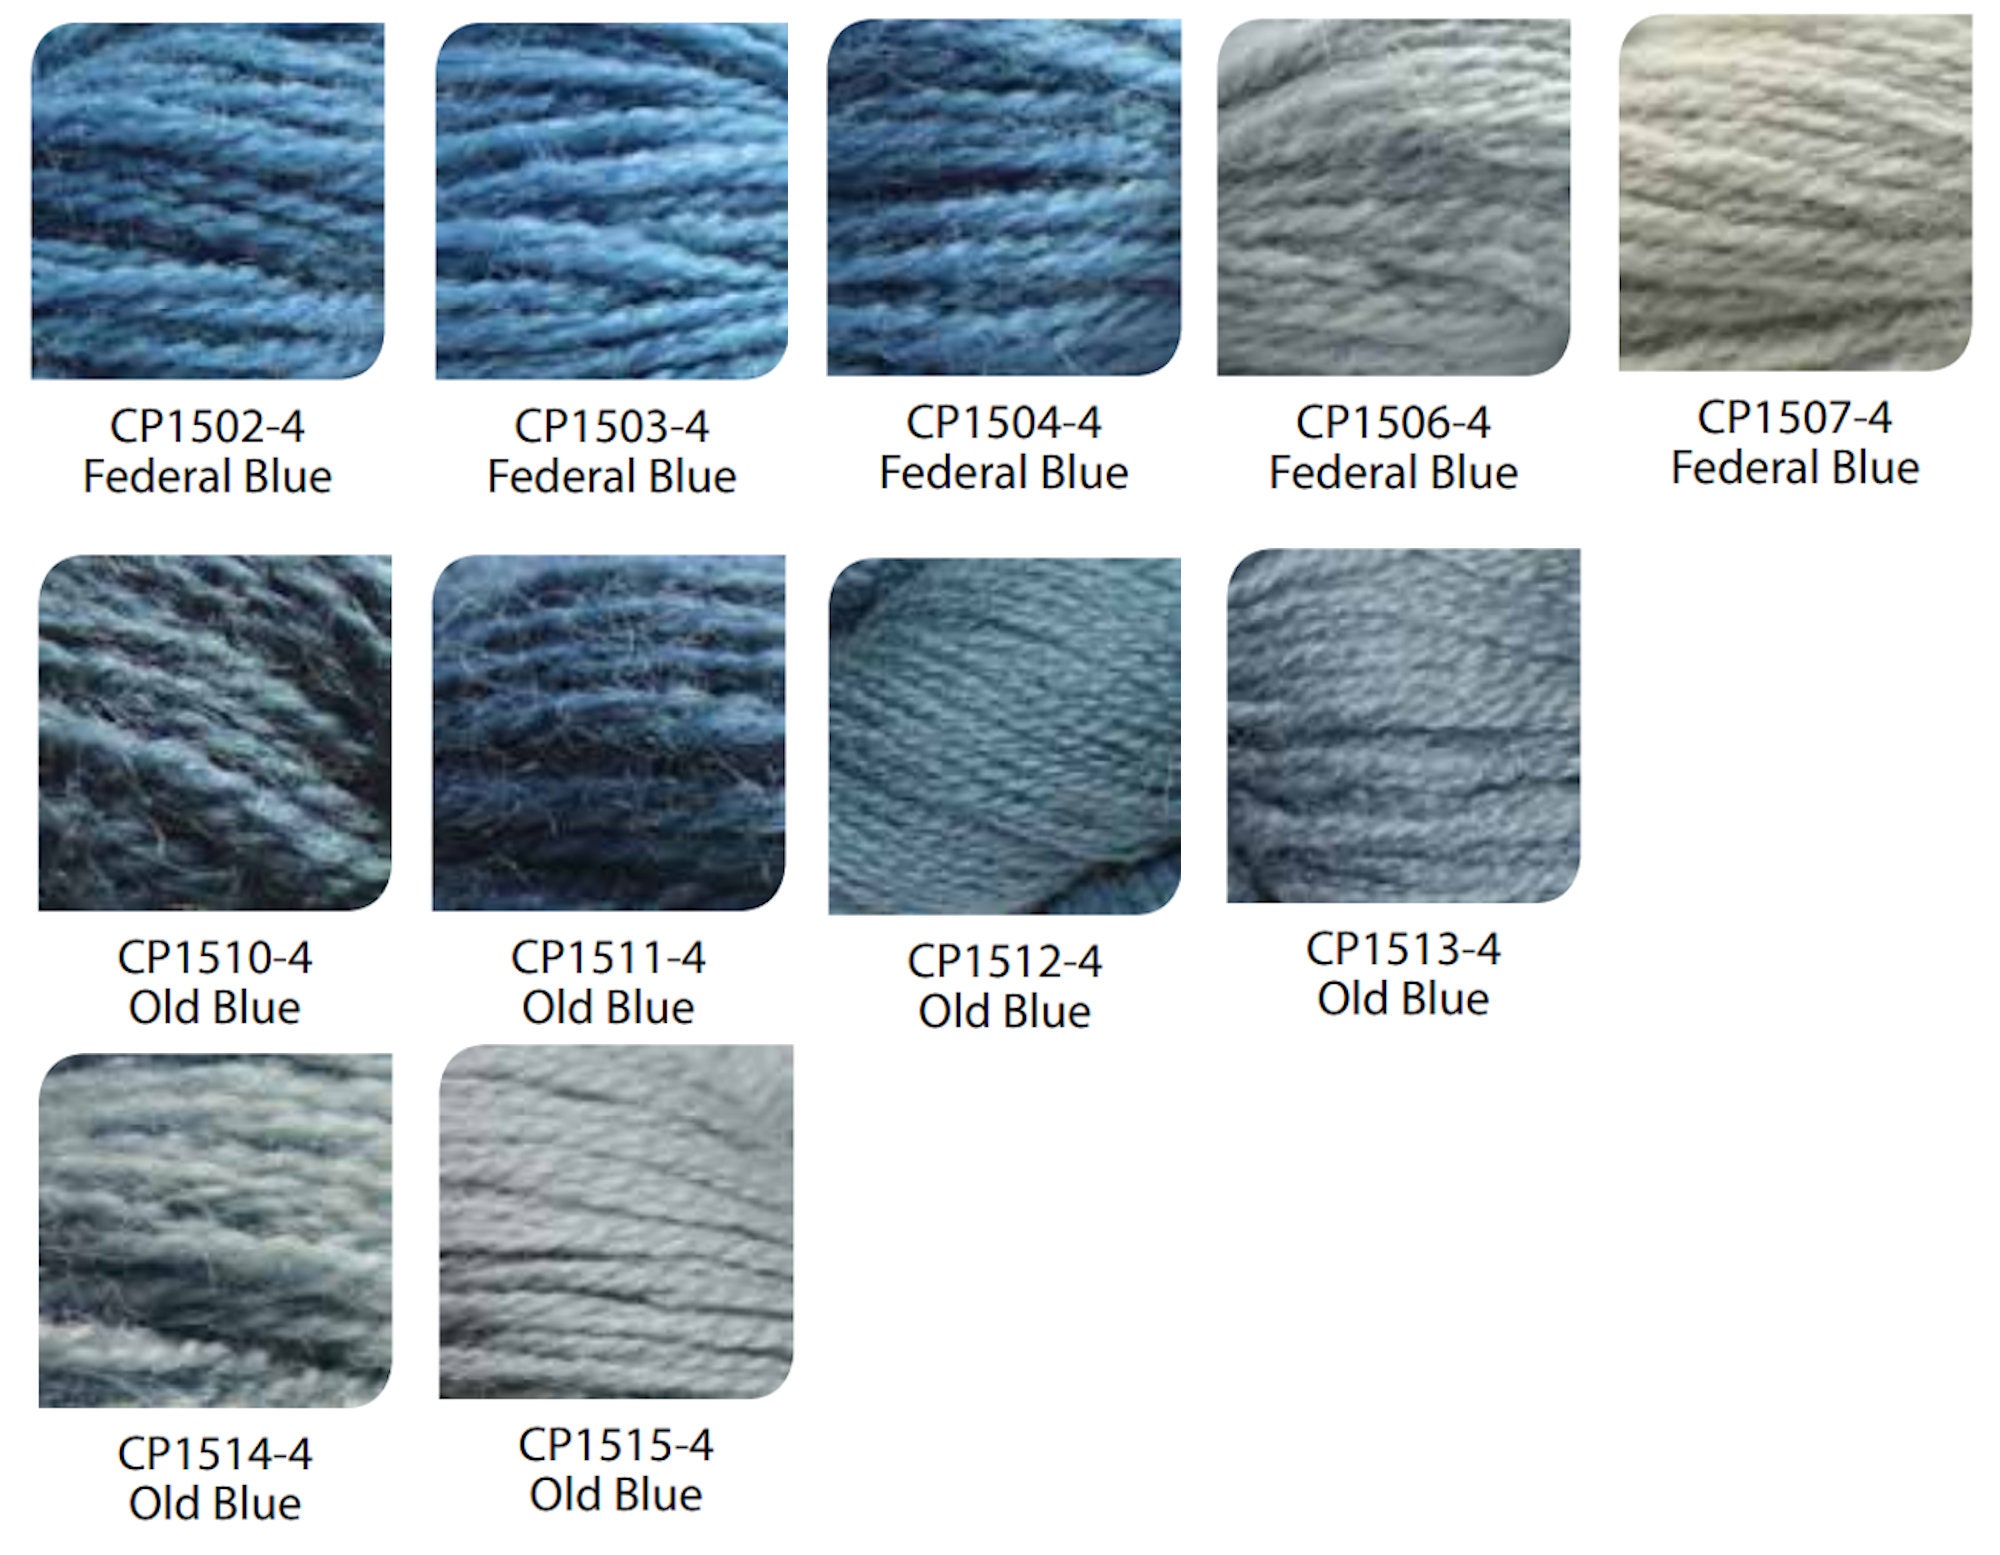 Appletons Darning Wool Gradient, Marine Blue